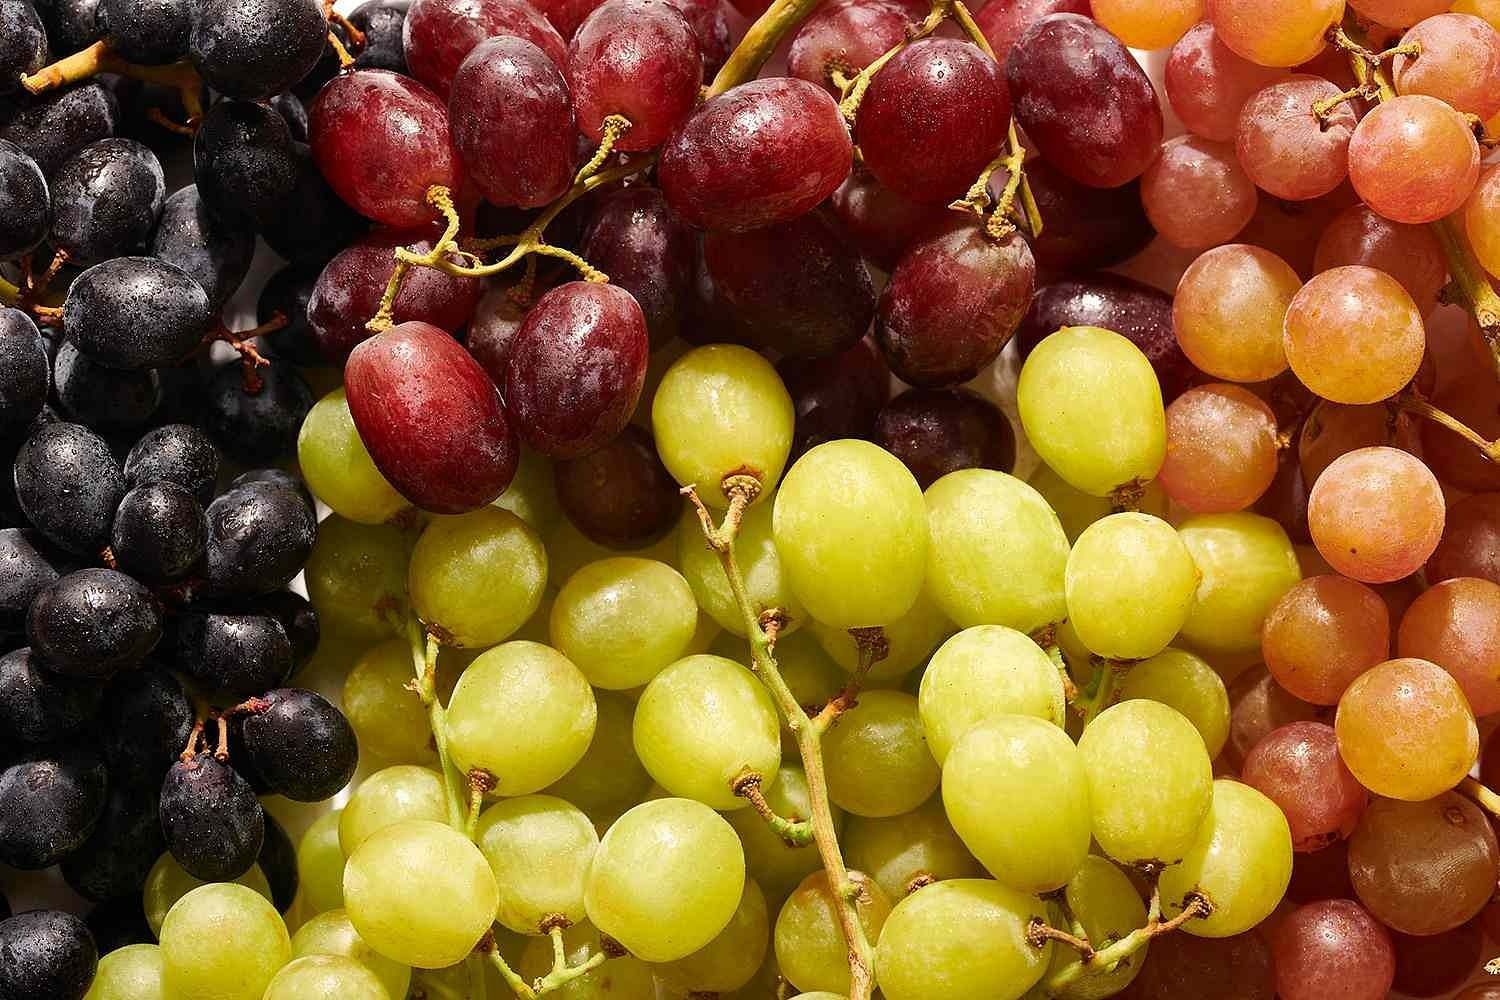 Grapes (Image via The Spruce Eats)